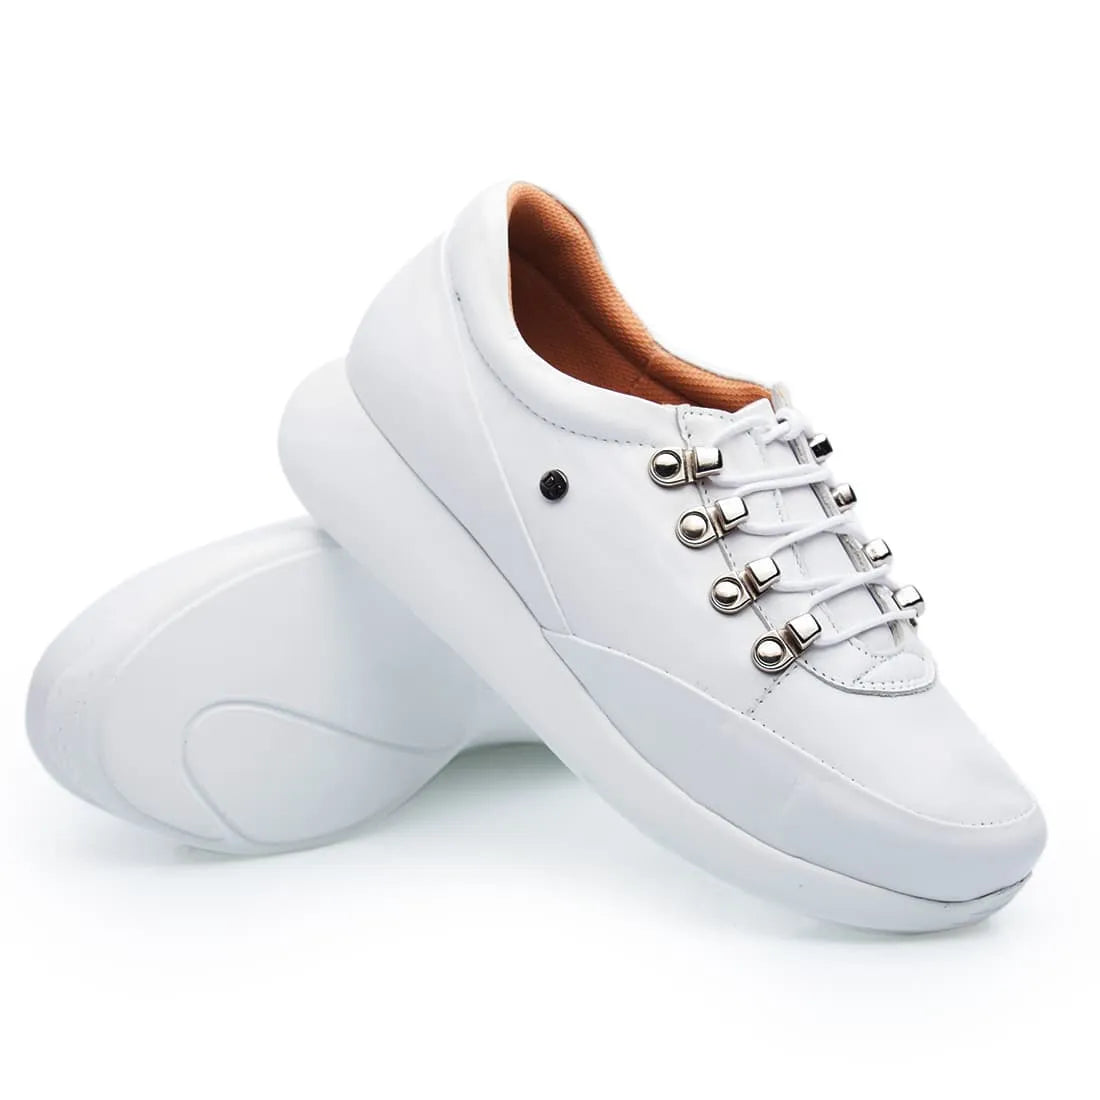 Compre 1 Leve 2 - Tênis Doctor Shoes Couro 1401 Branco Ortopédico